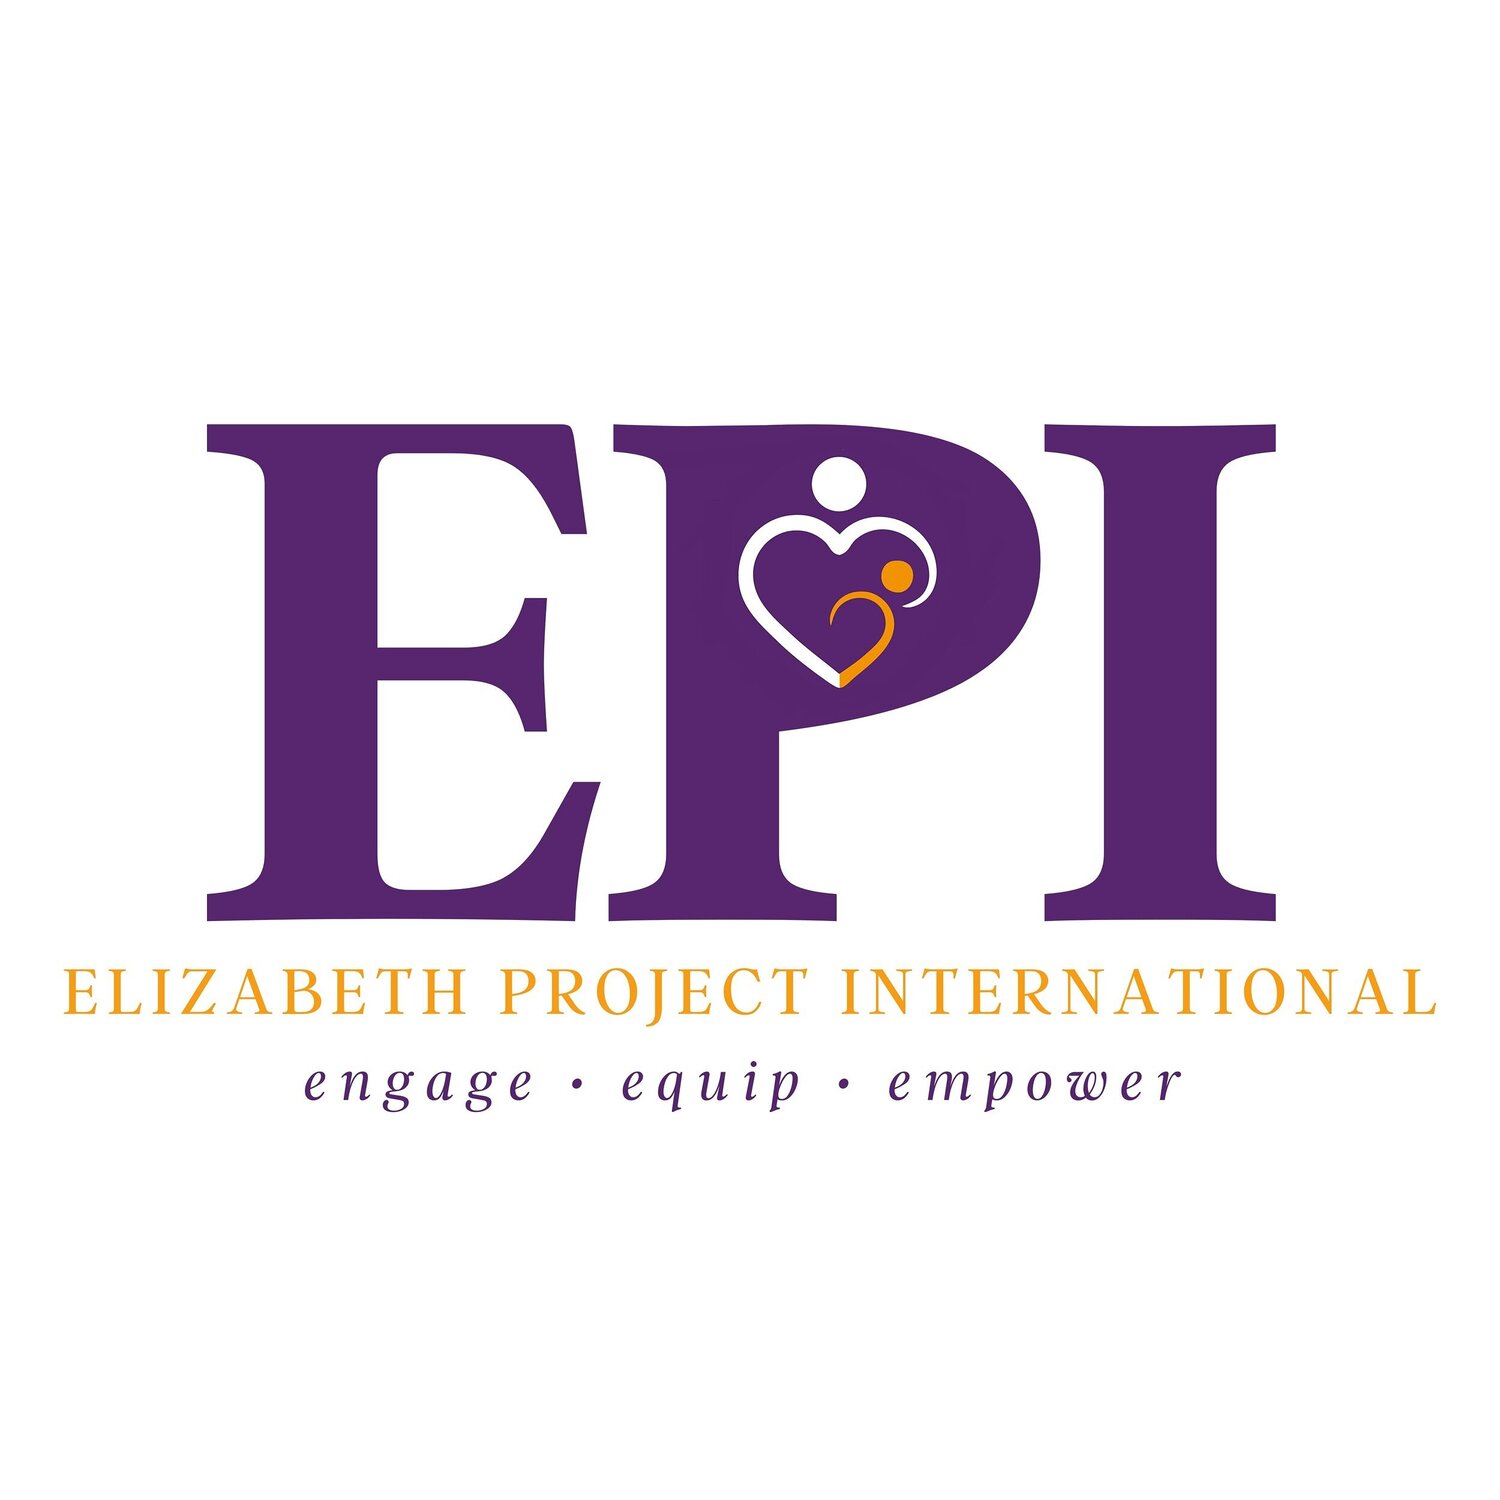 ELIZABETH PROJECT INTERNATIONAL